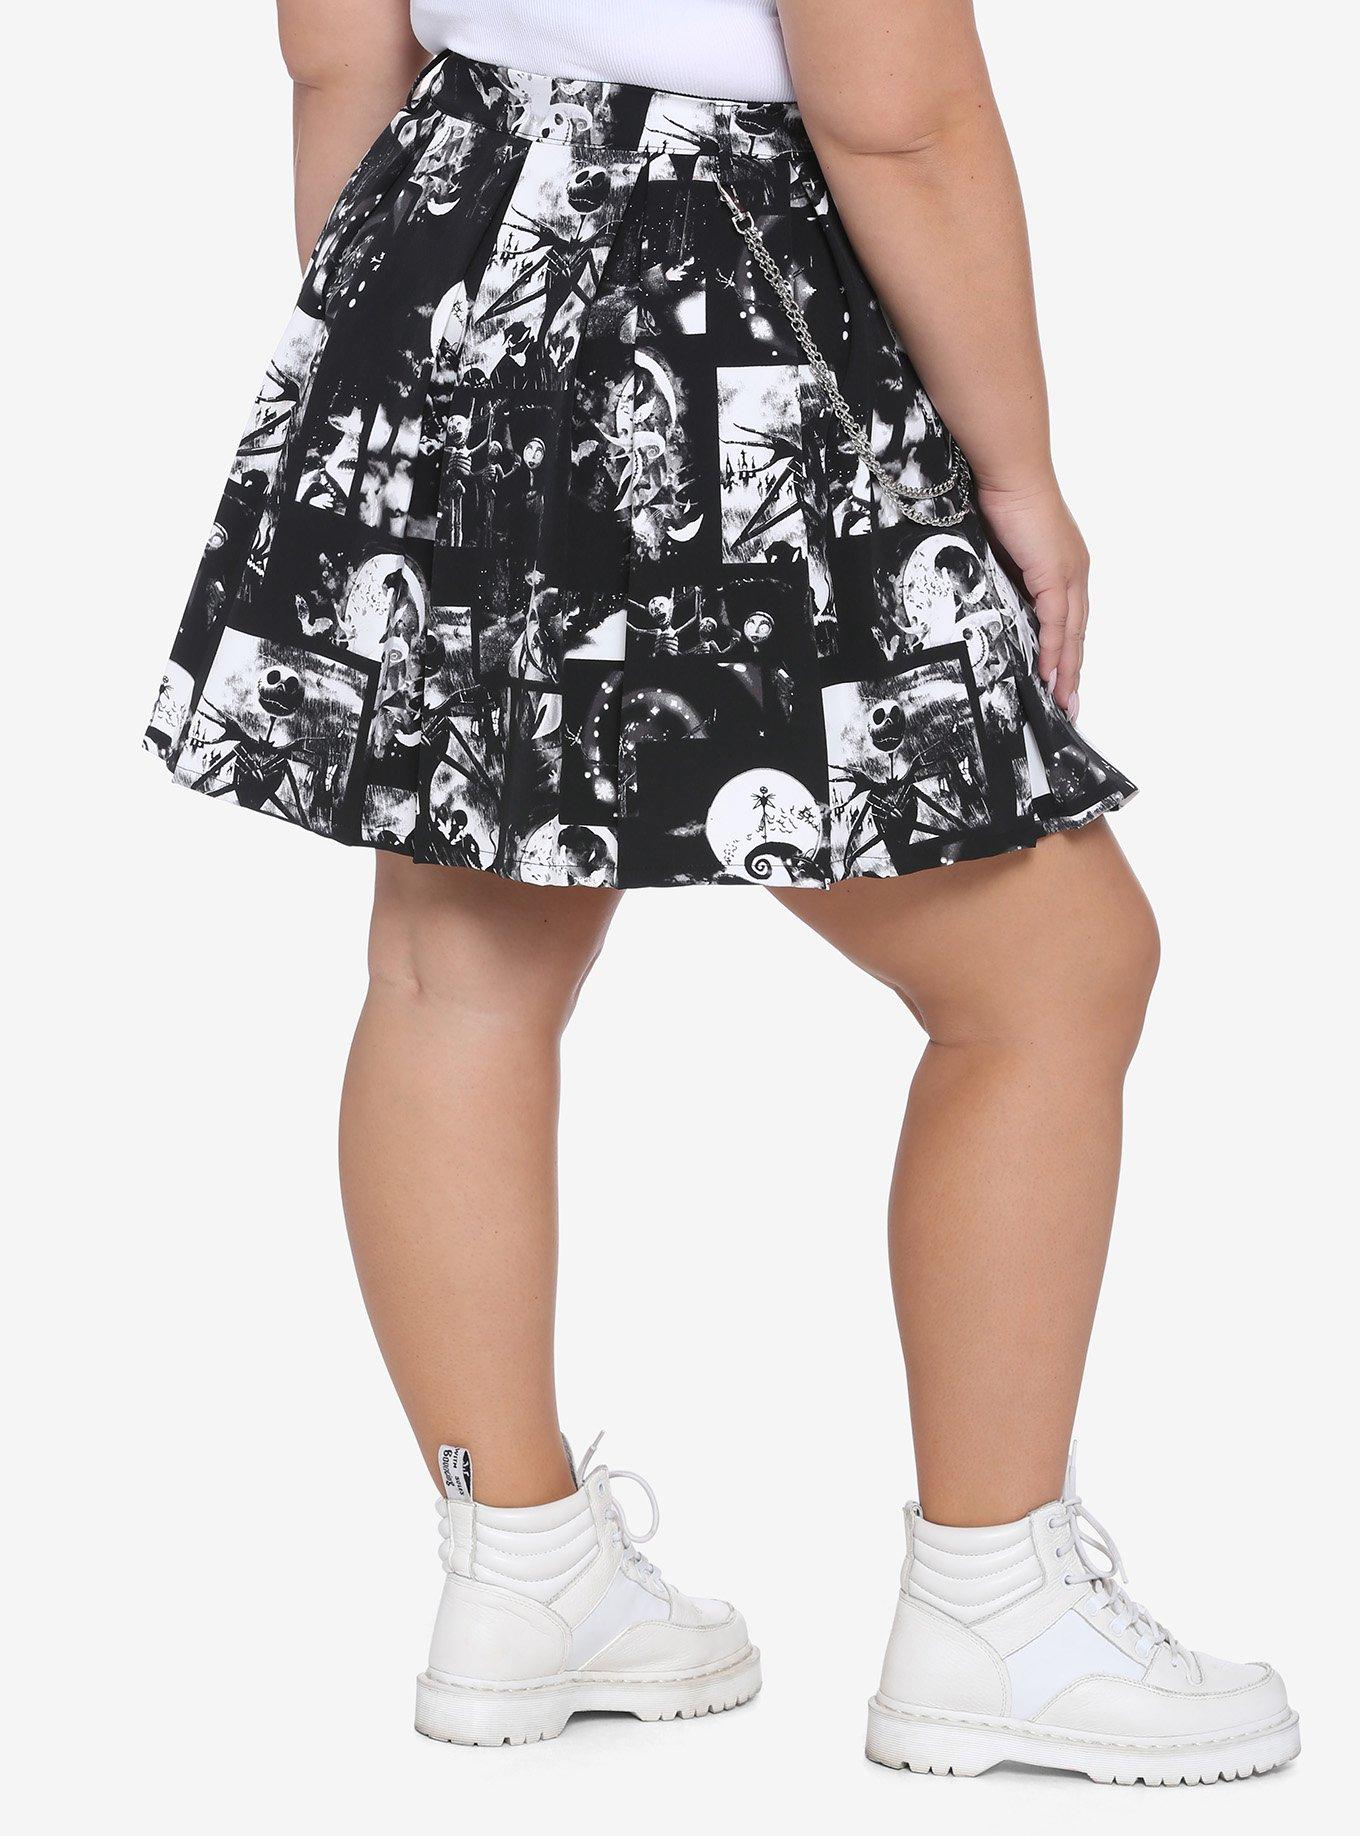 THe Nightmare Before Christmas Black & White Pleated Skirt Plus Size, BLACK, alternate